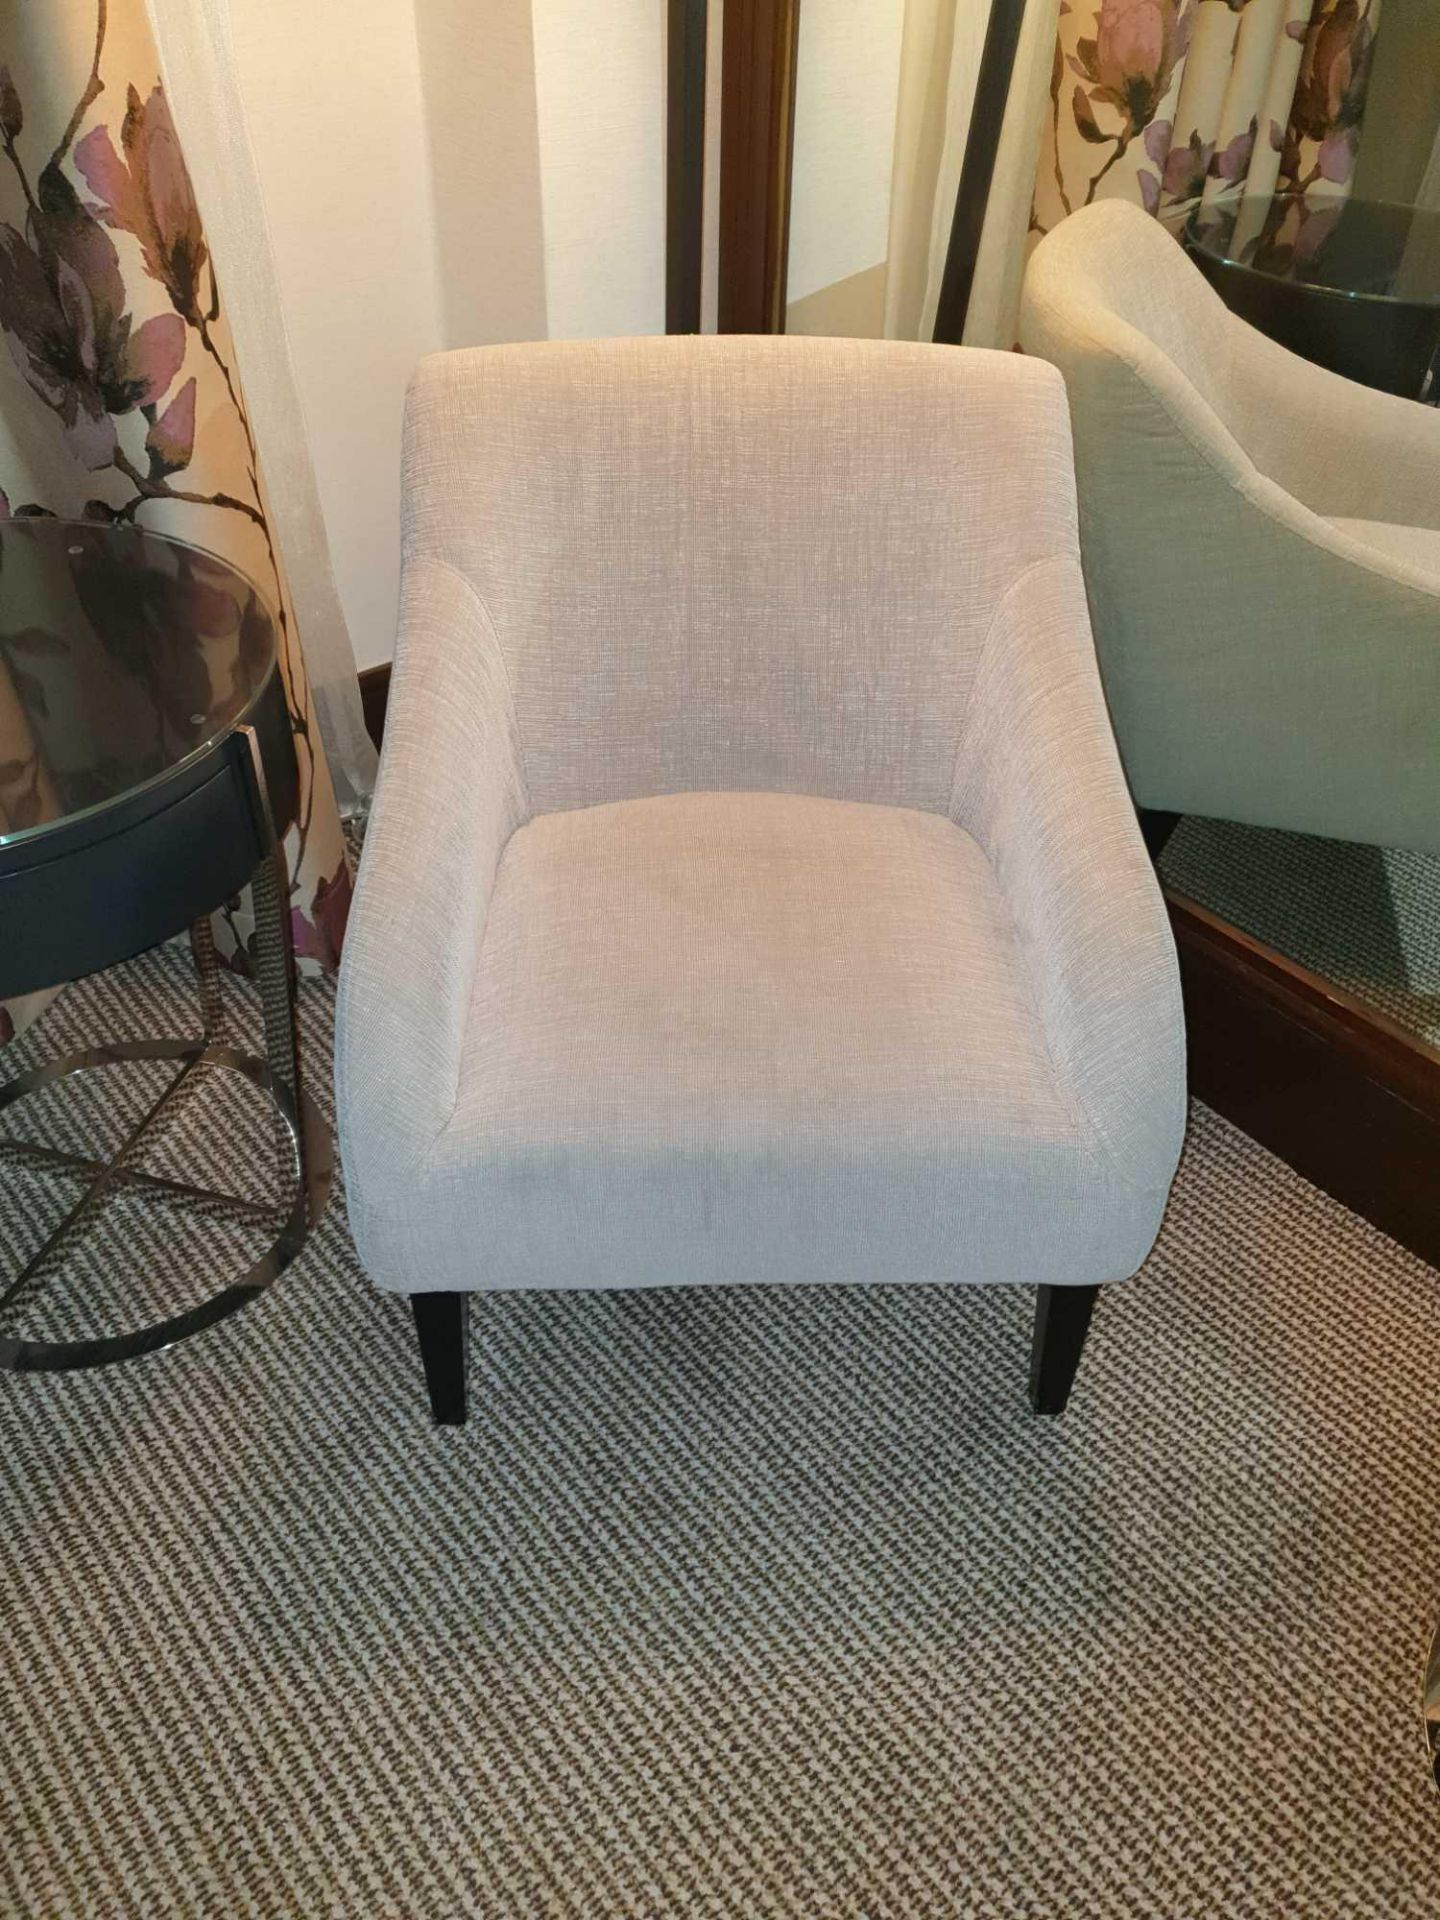 Cream Cotton Fabric Armchair With Wooden Legs 82 x 50 X 74 ( Loc 430)